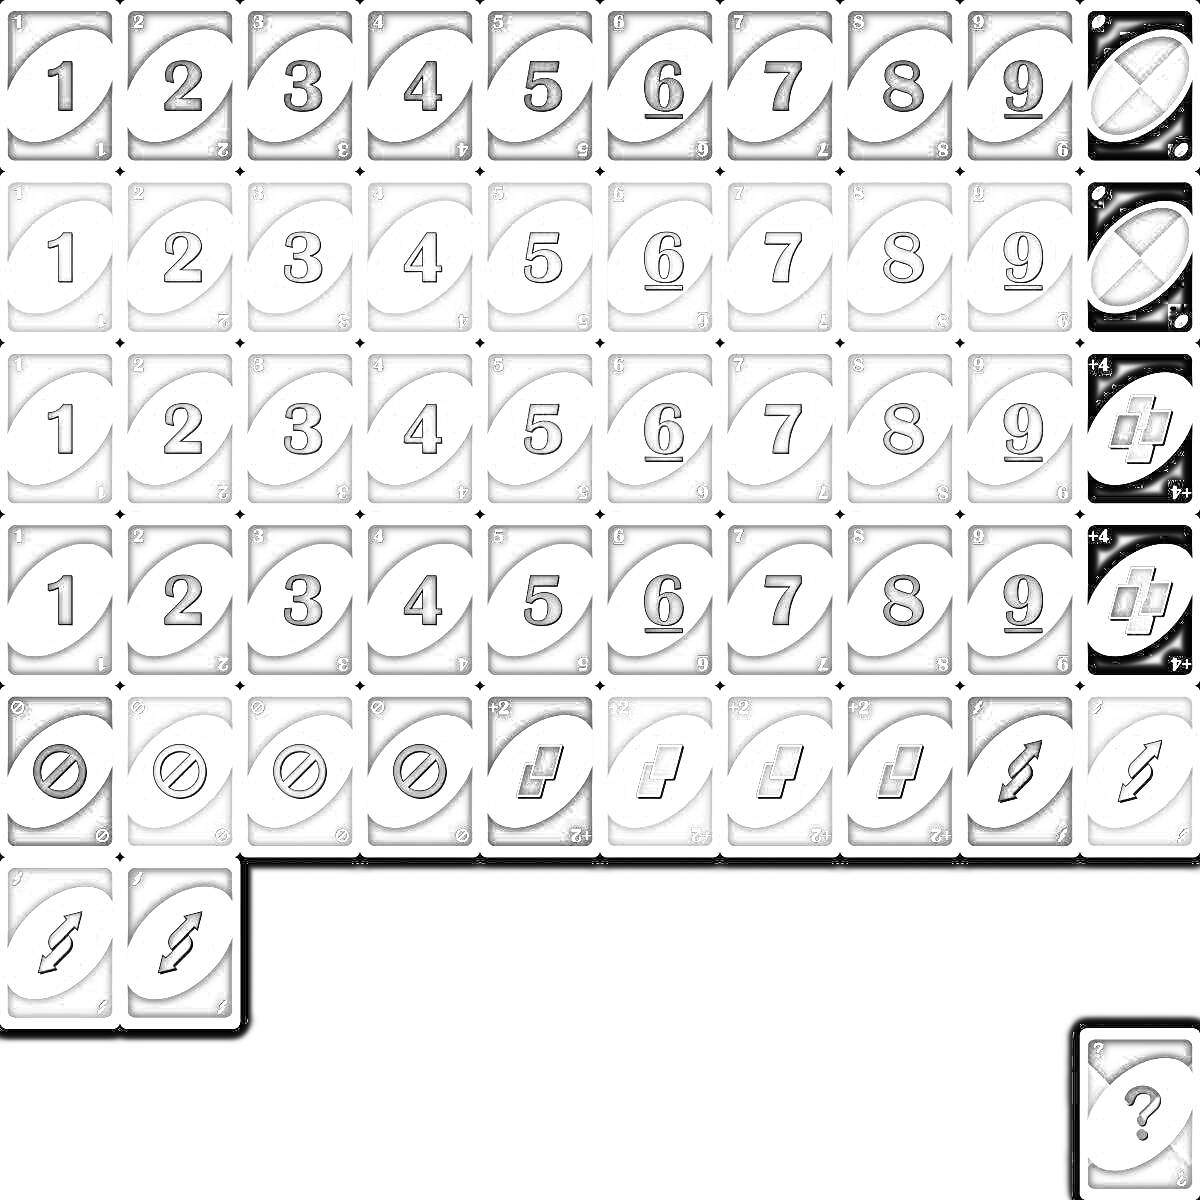 Раскраска карточка уно - числа от 0 до 9, пропуск хода, смена направления, плюс два, смена цвета, плюс четыре